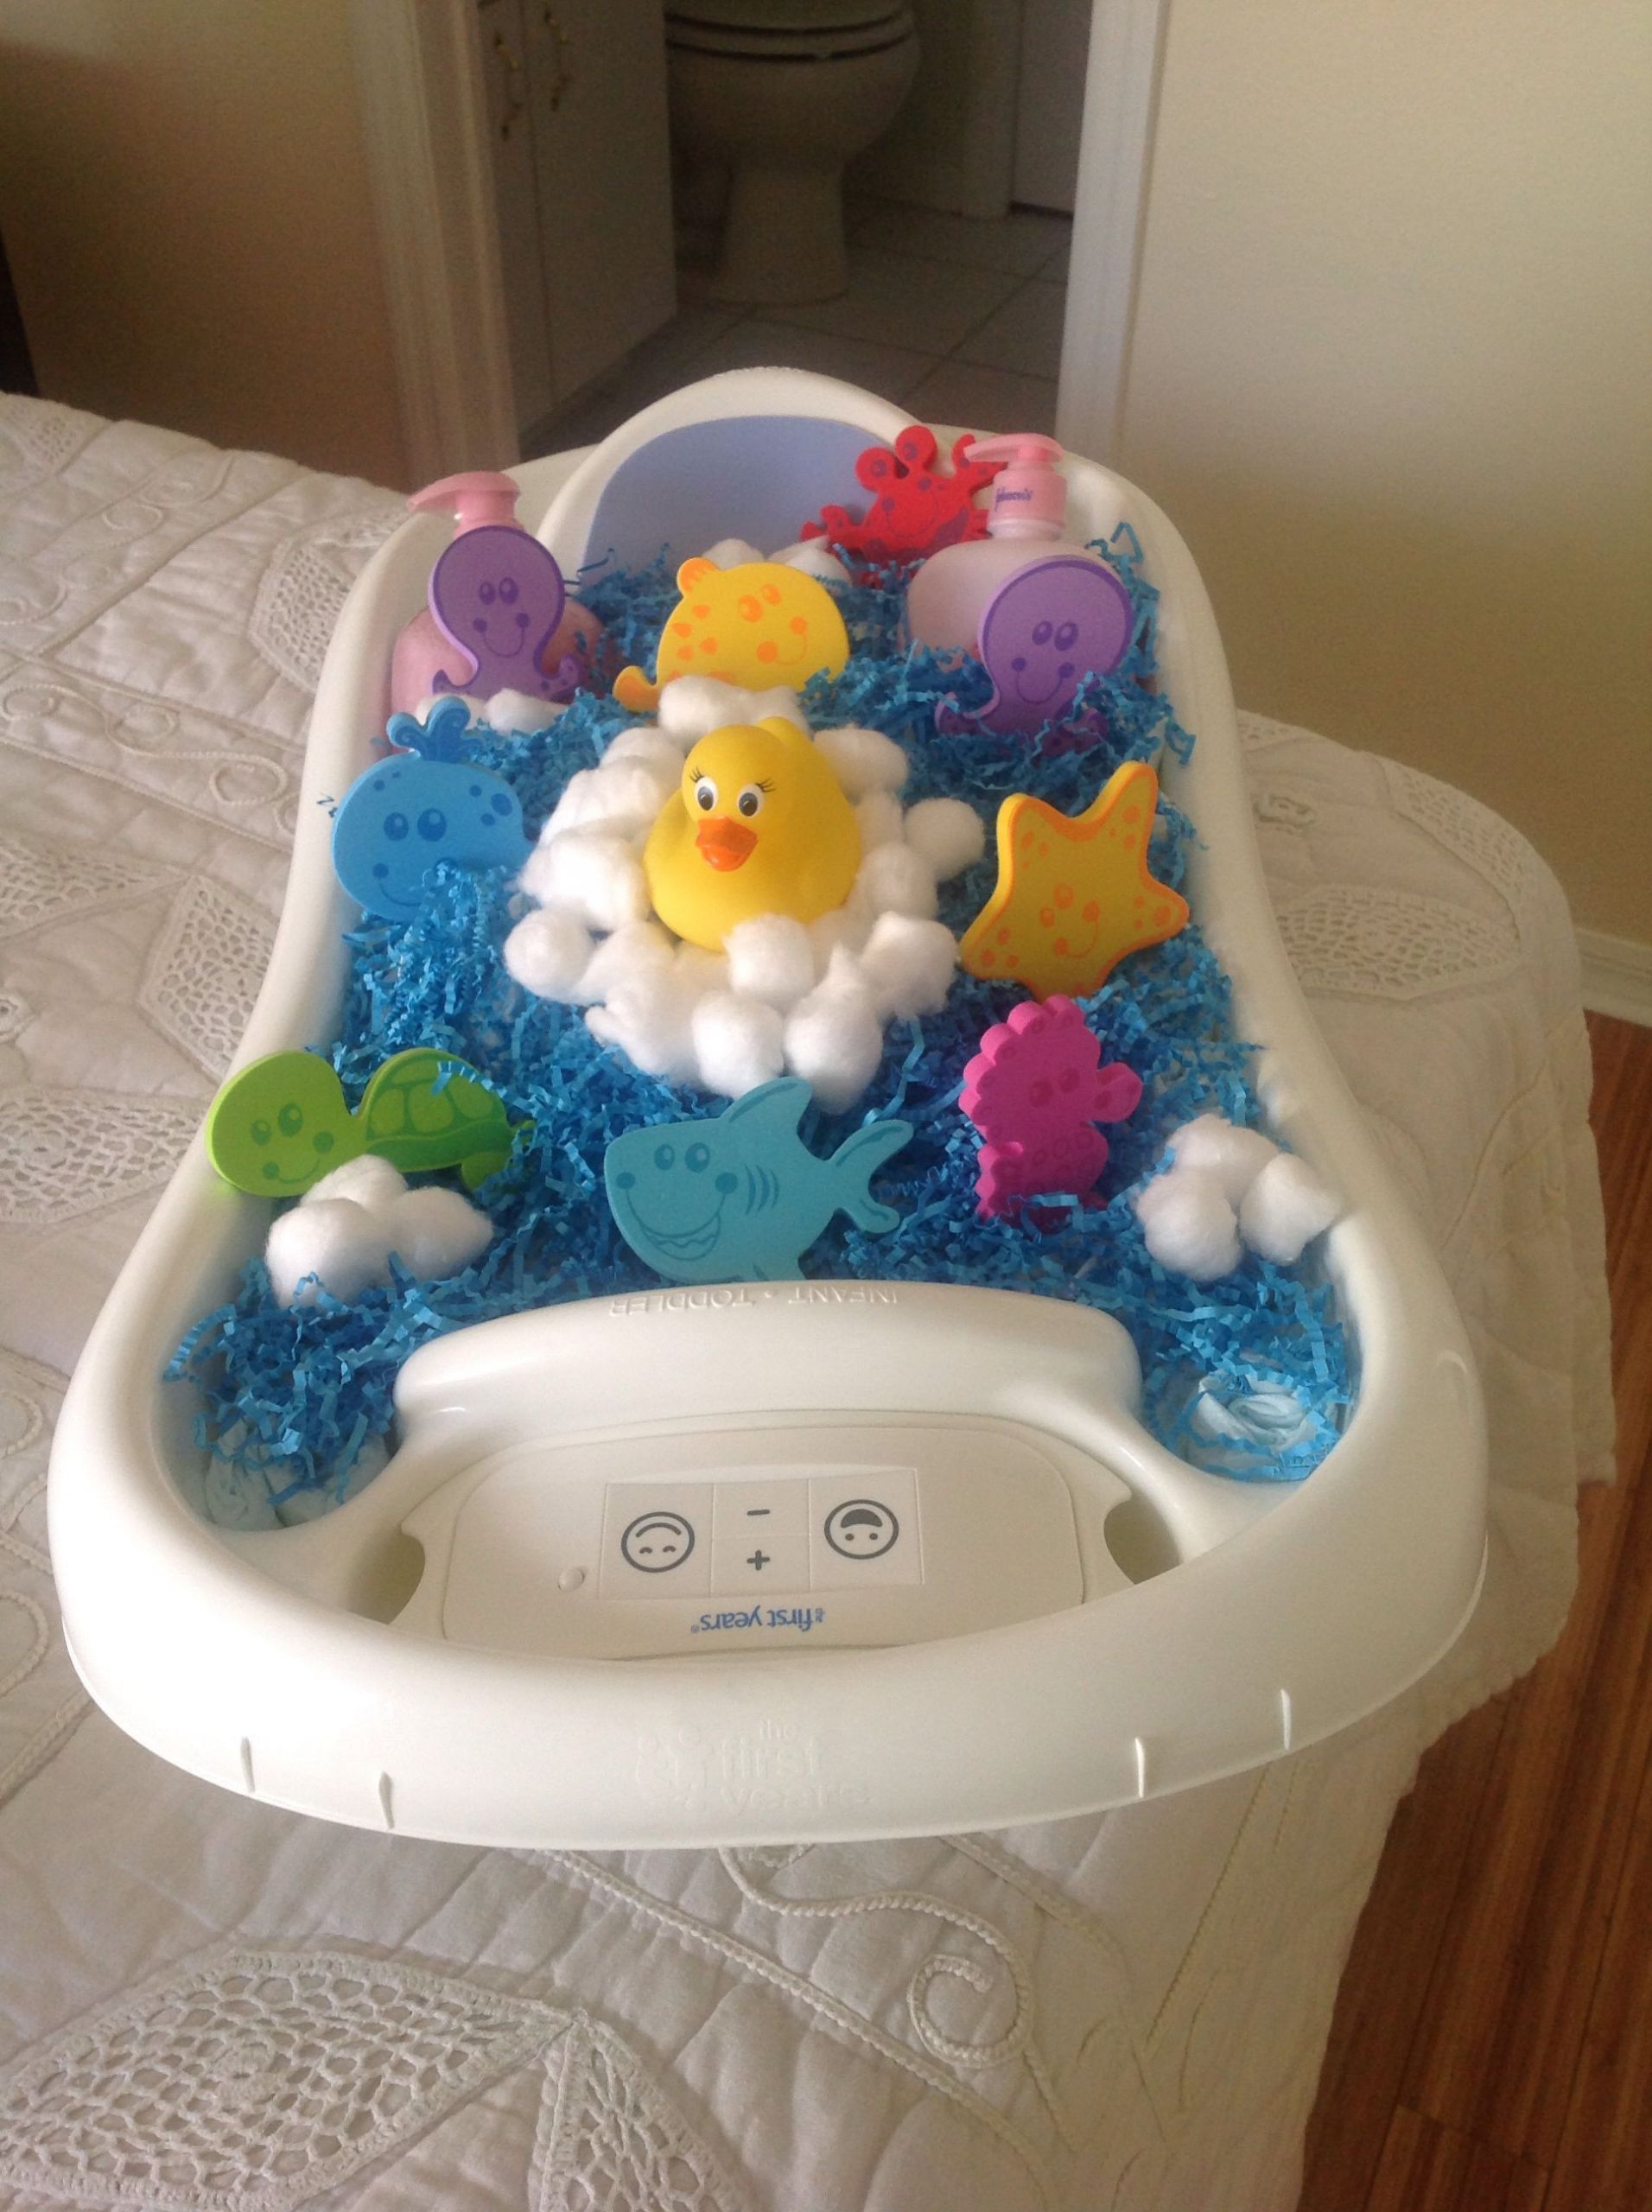 Baby Shower Bathtub Gift Ideas
 Bath time diaper cake in baby tub